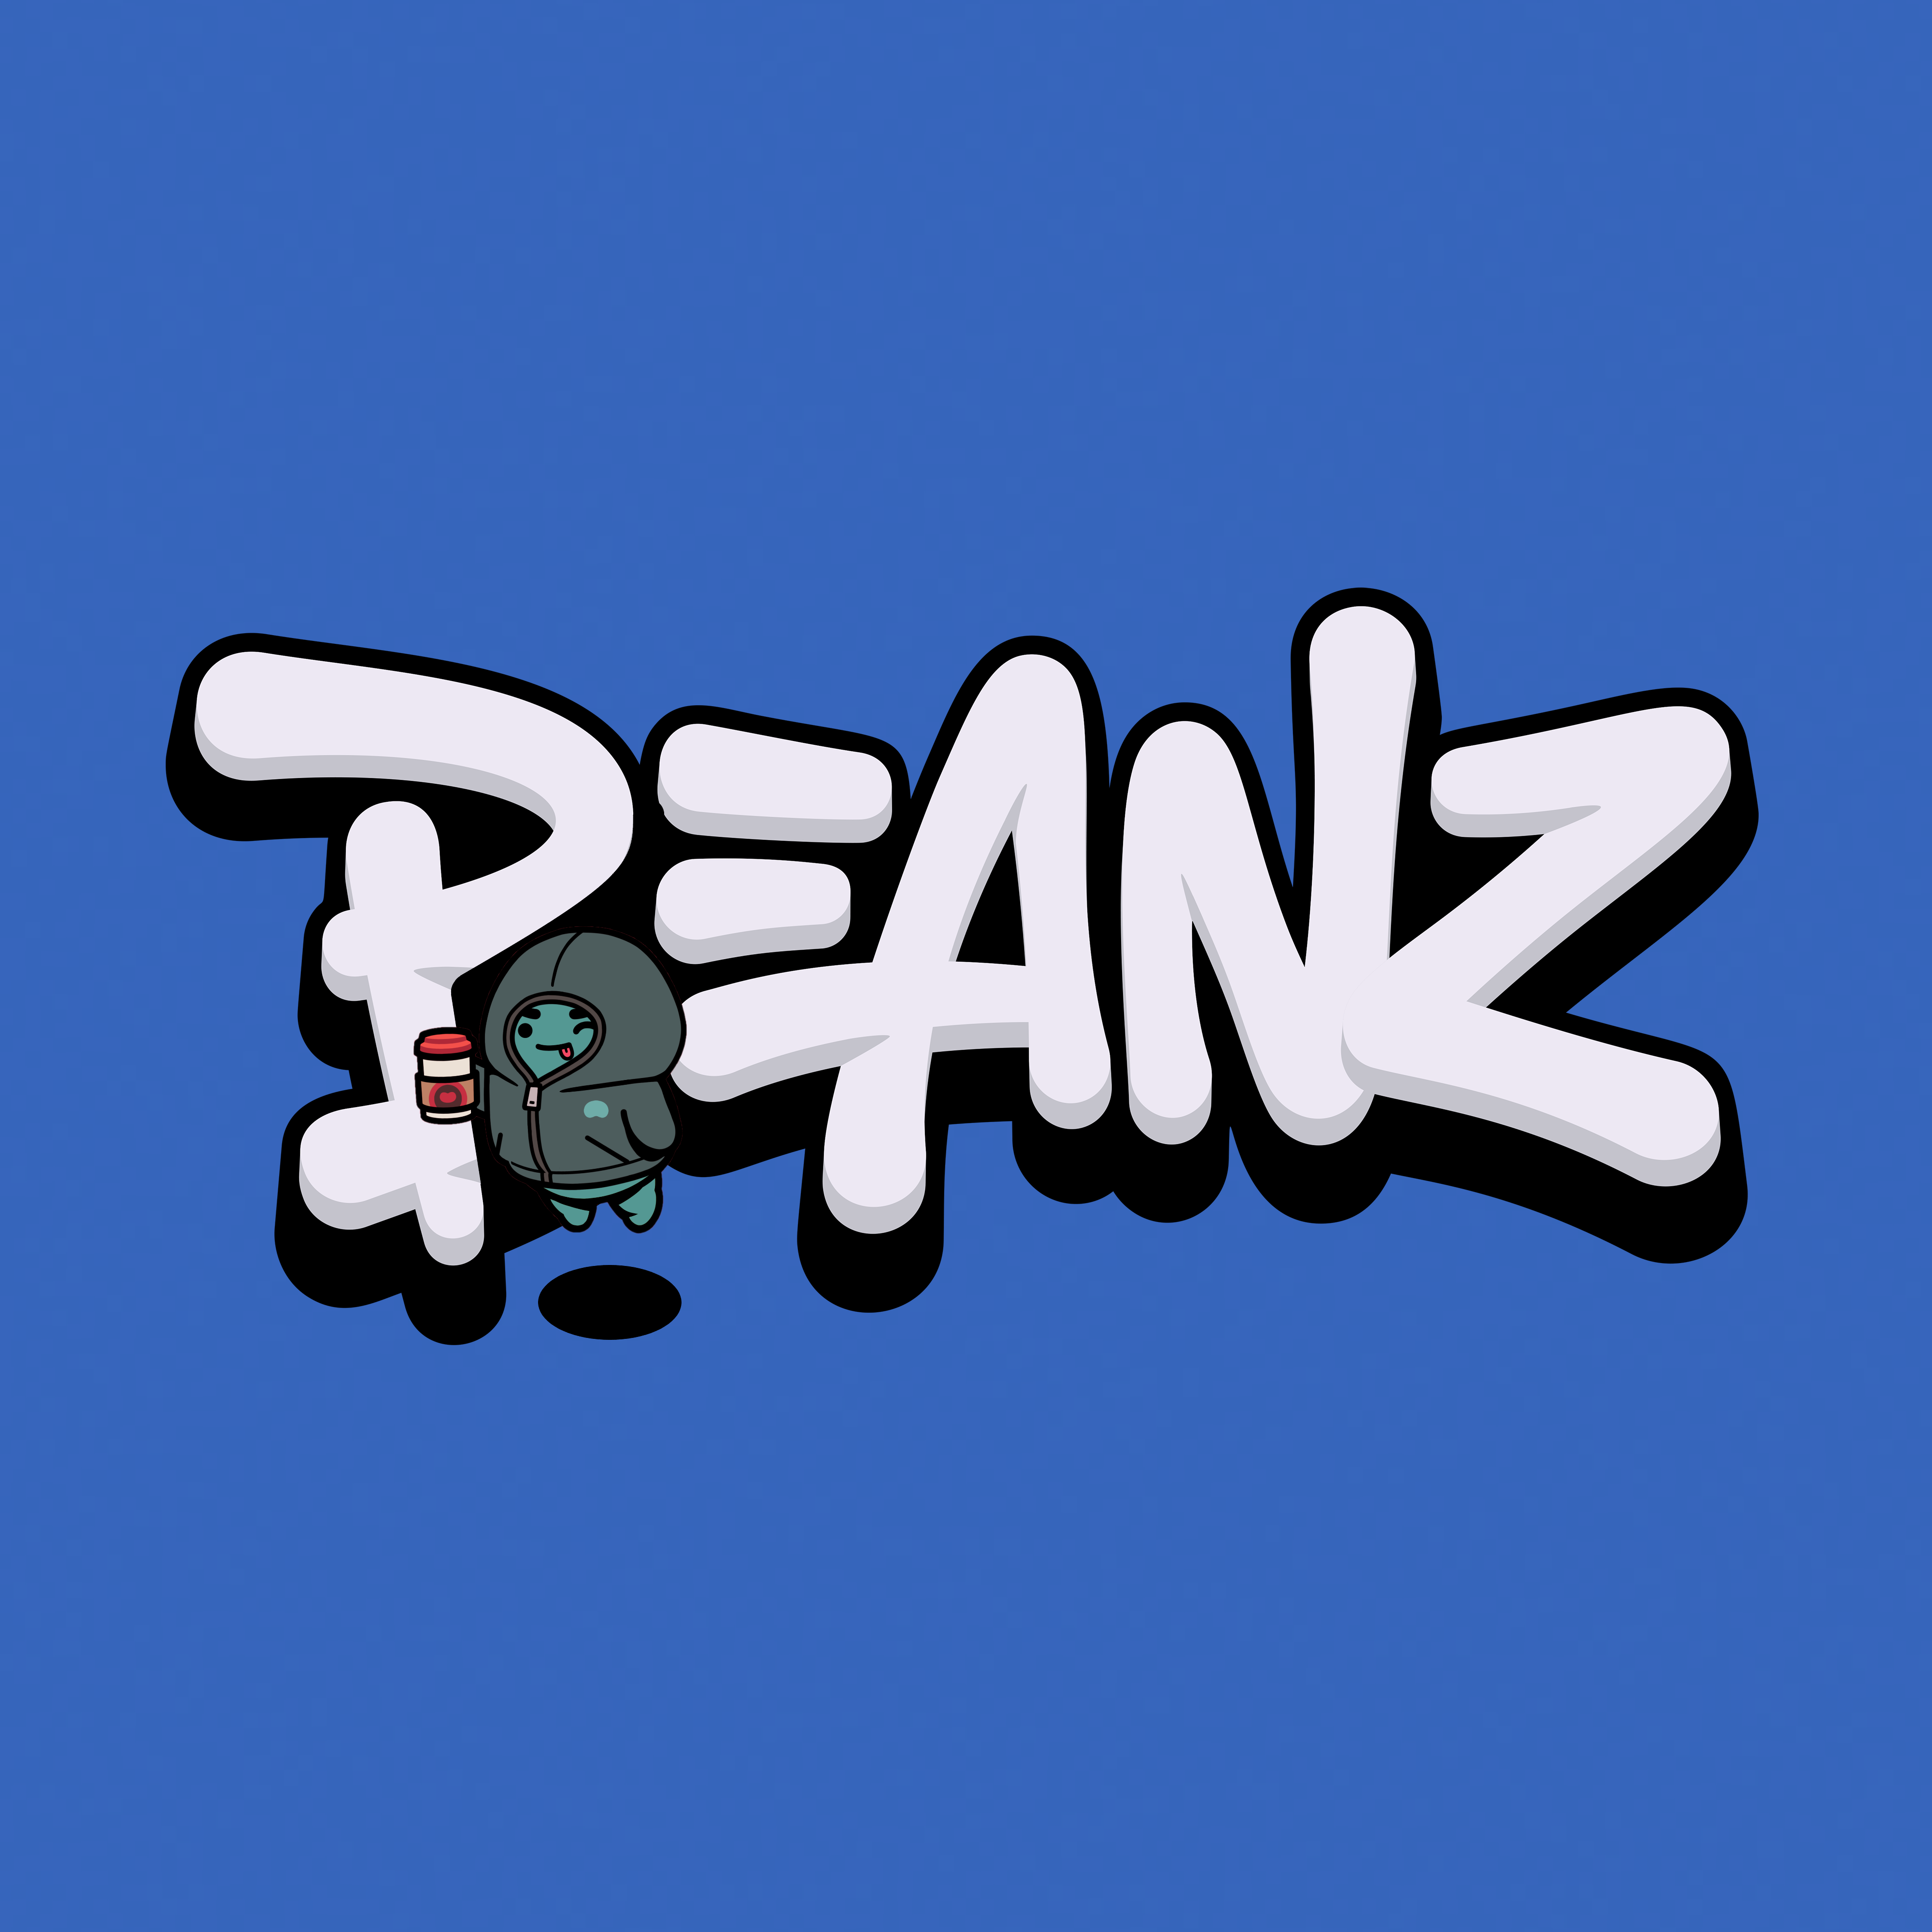 Peanz 